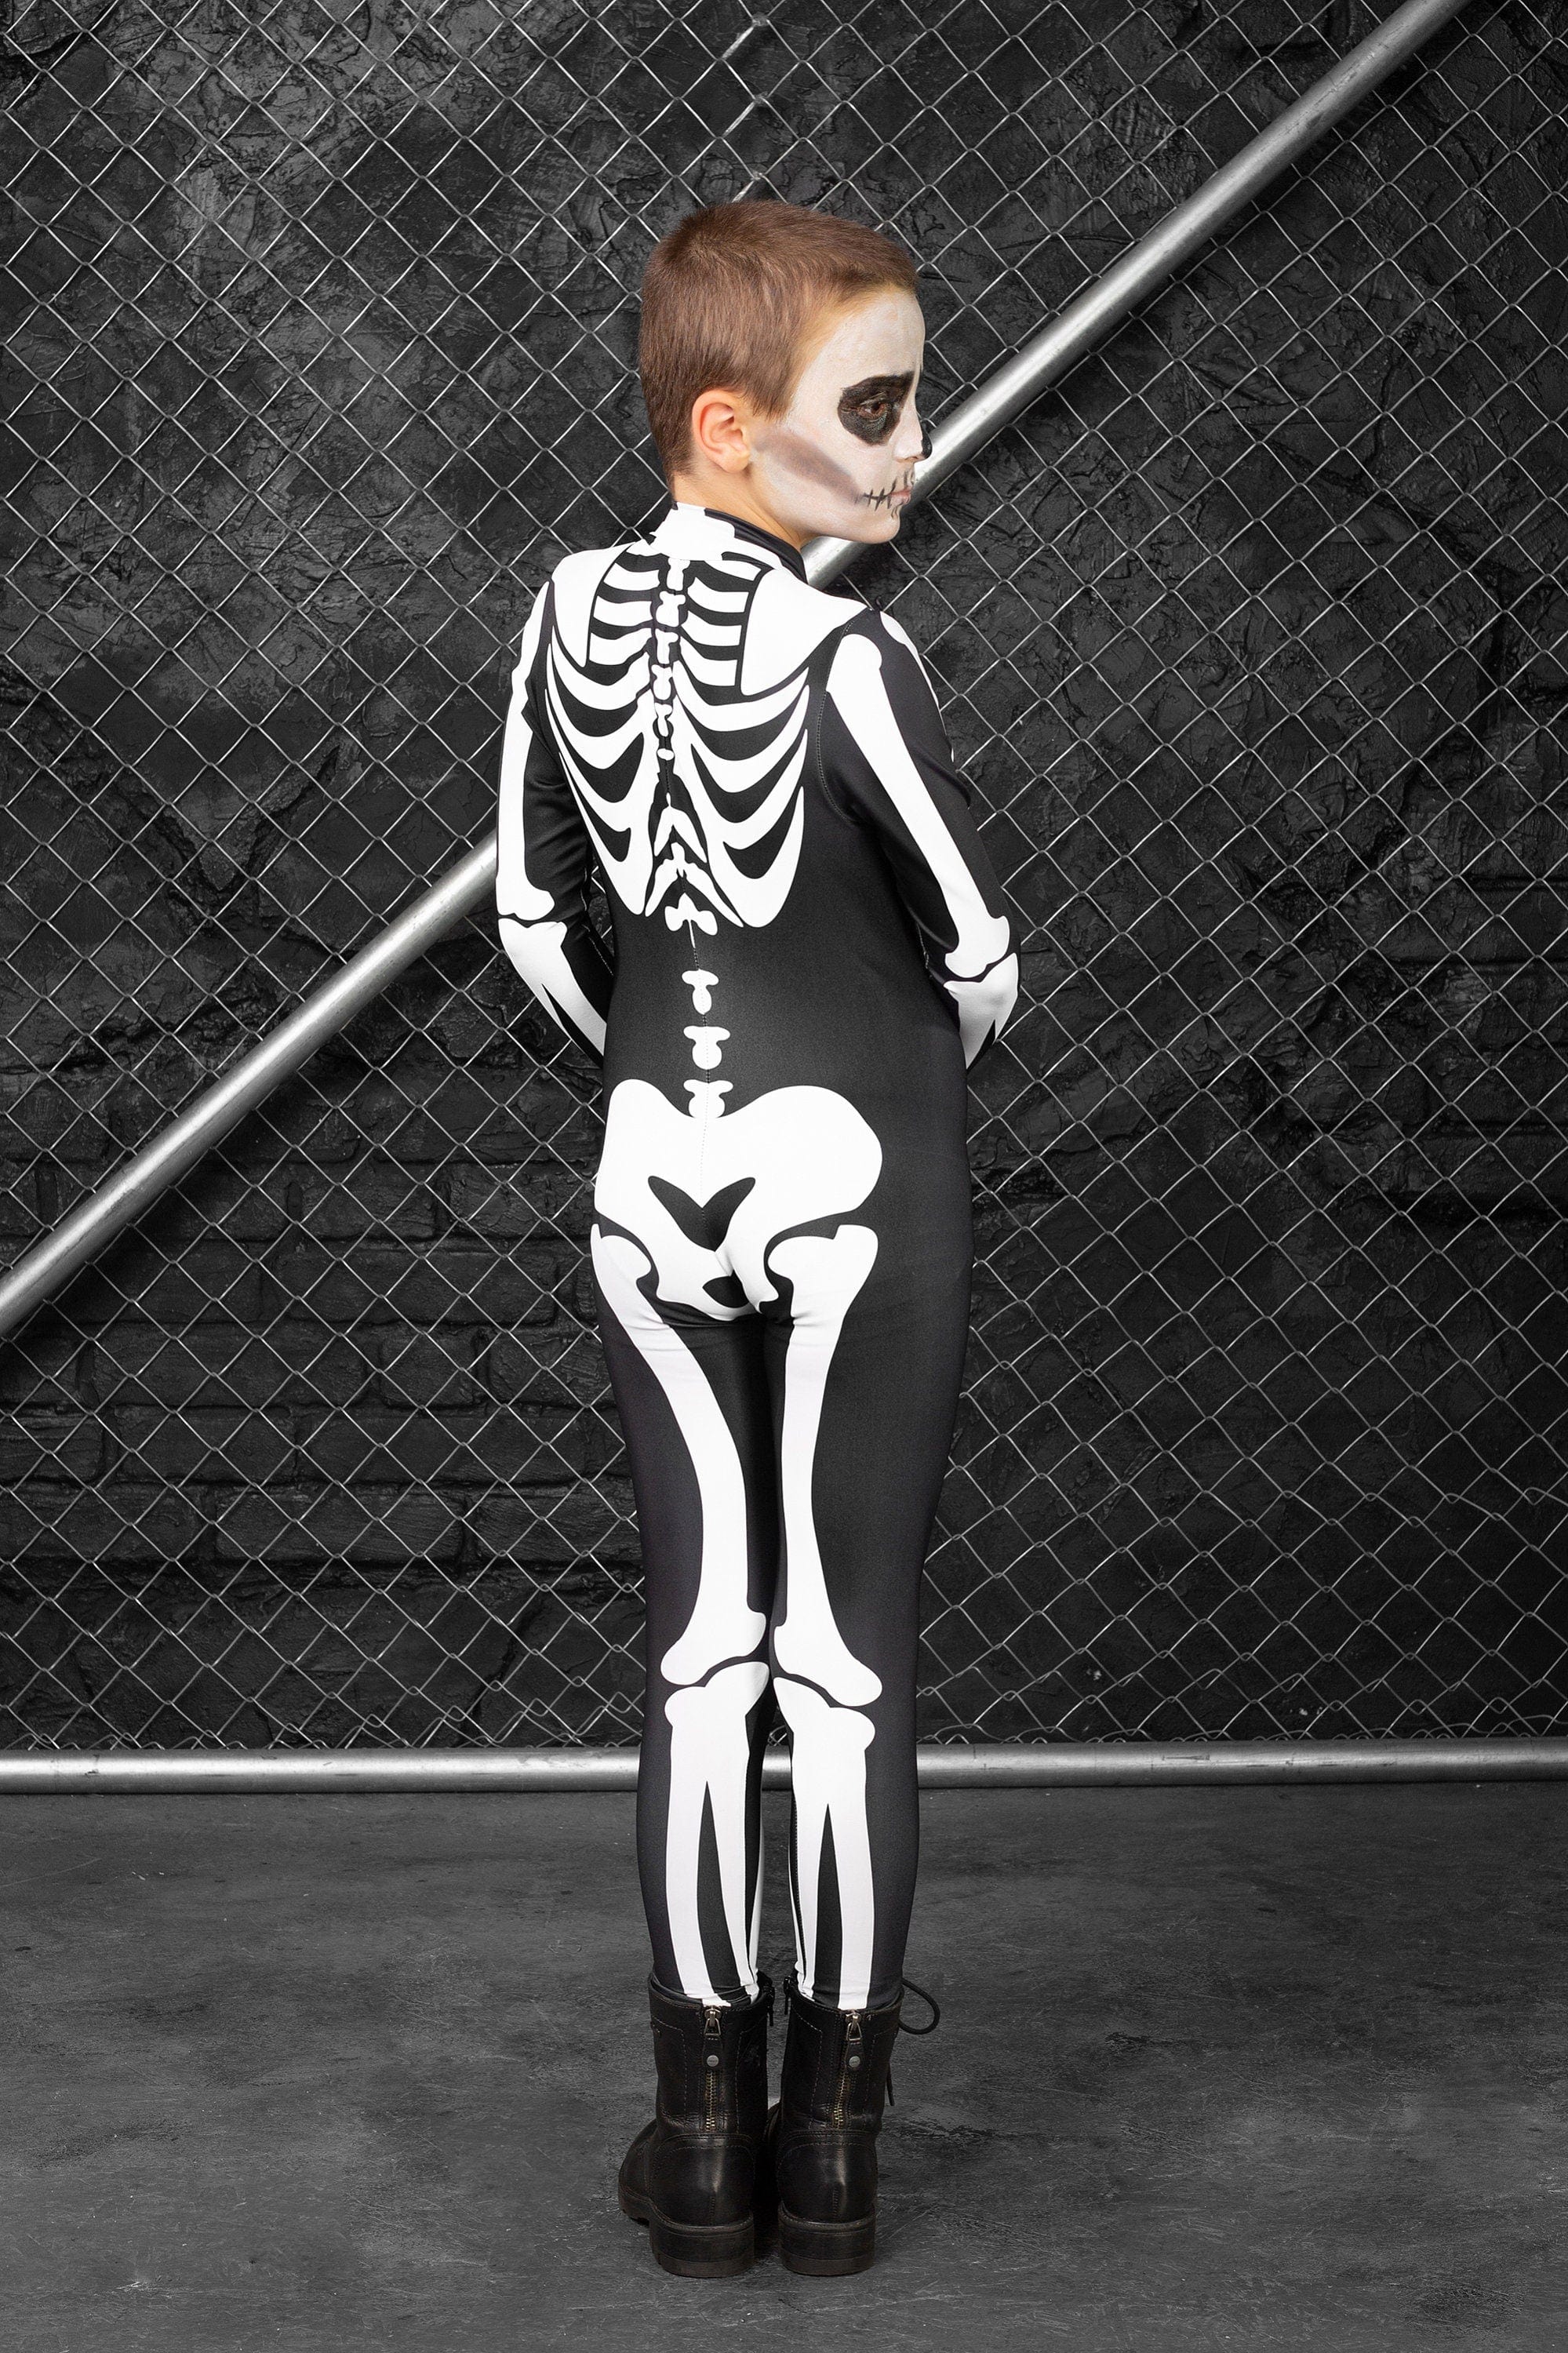 Boys Bossy Skeleton Costume